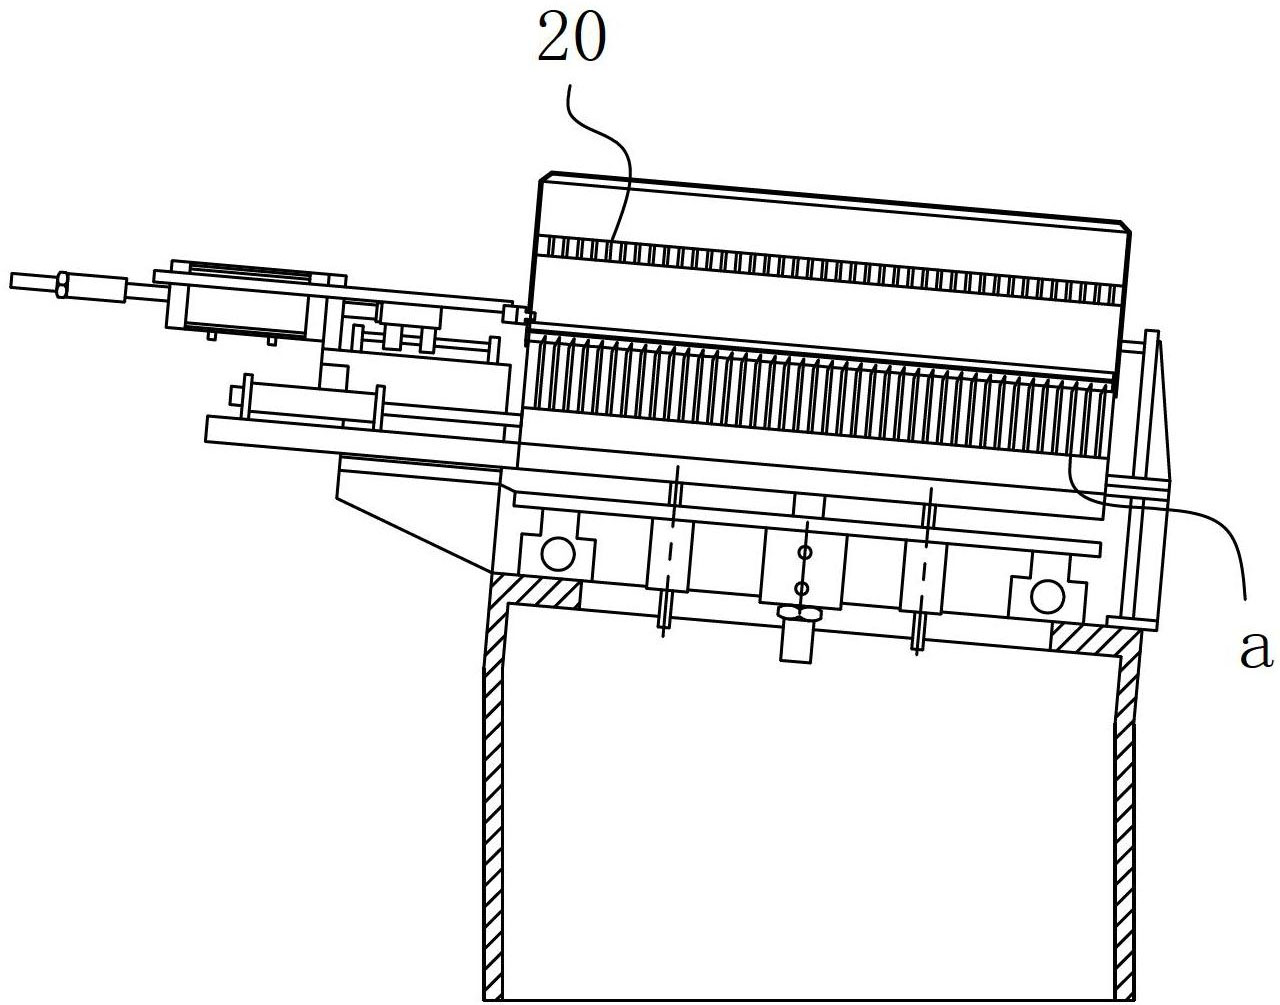 Material guiding mechanism based on heat radiator